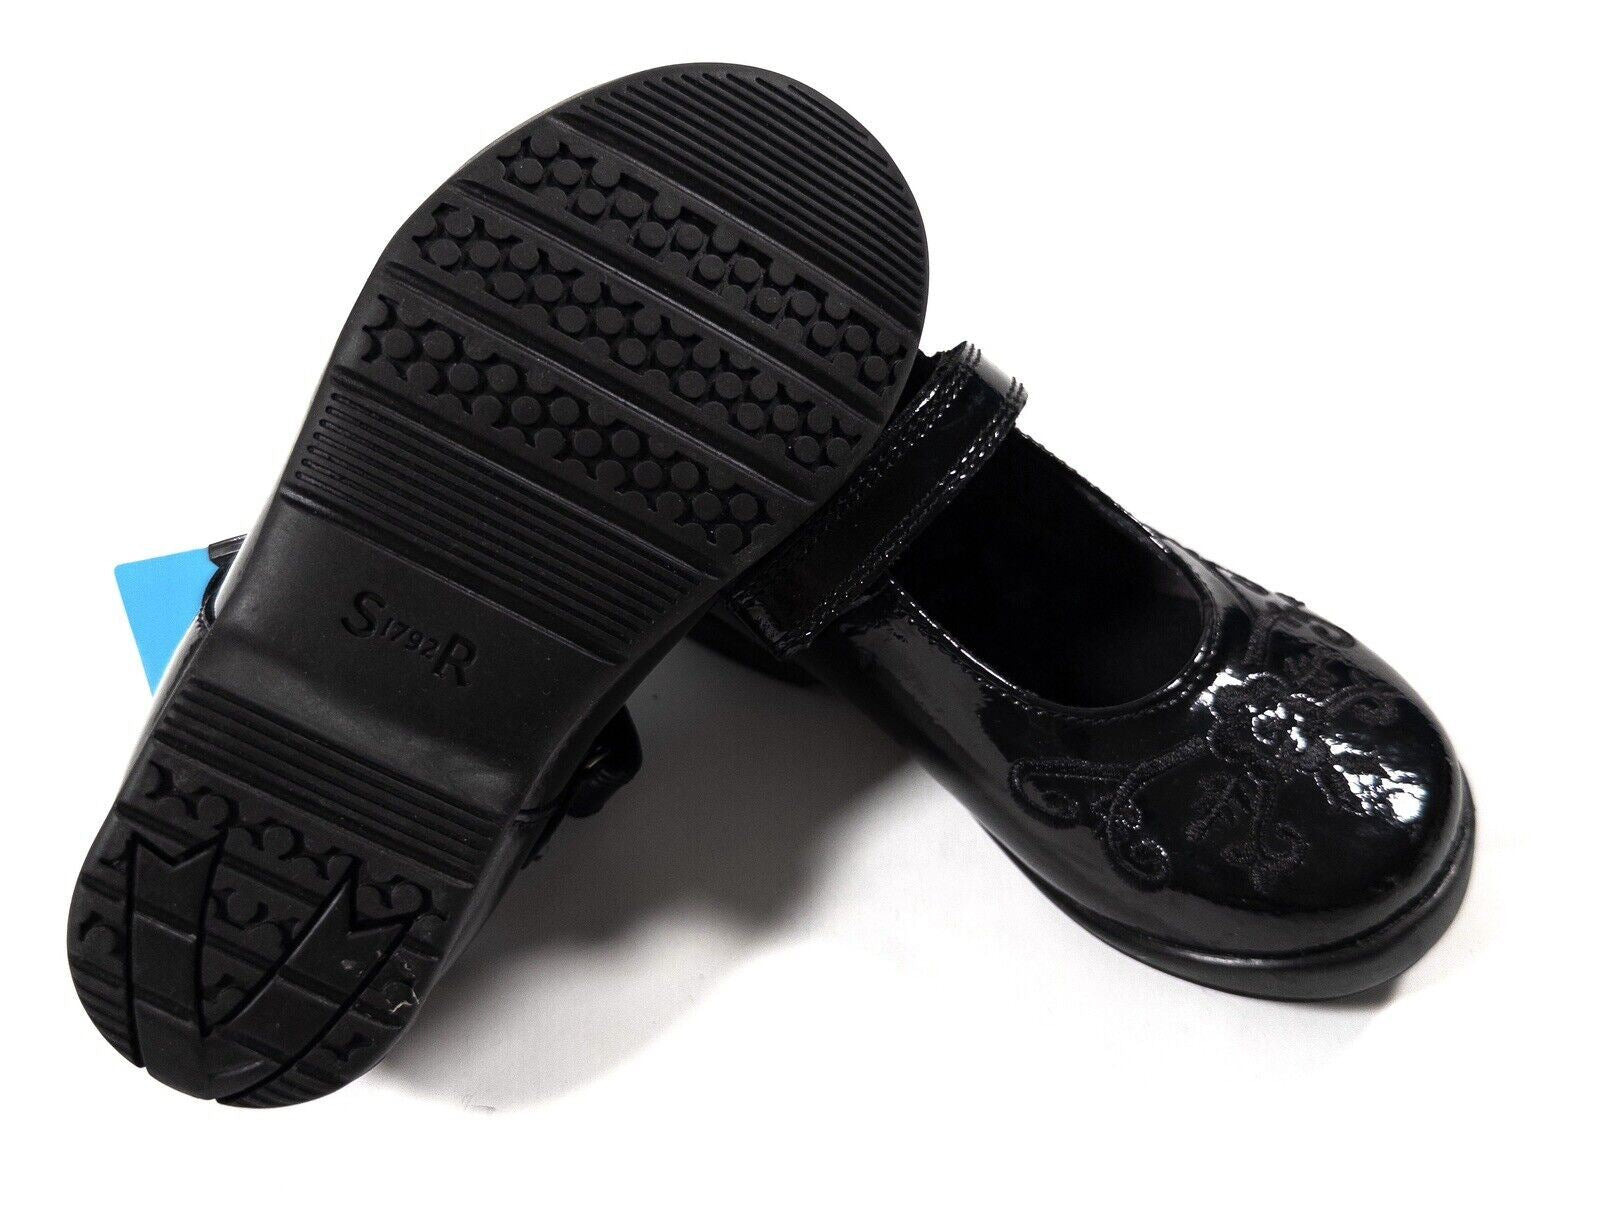 START RITE Kids Girls Black Patent School Shoes Floral Design Size UK 7 G